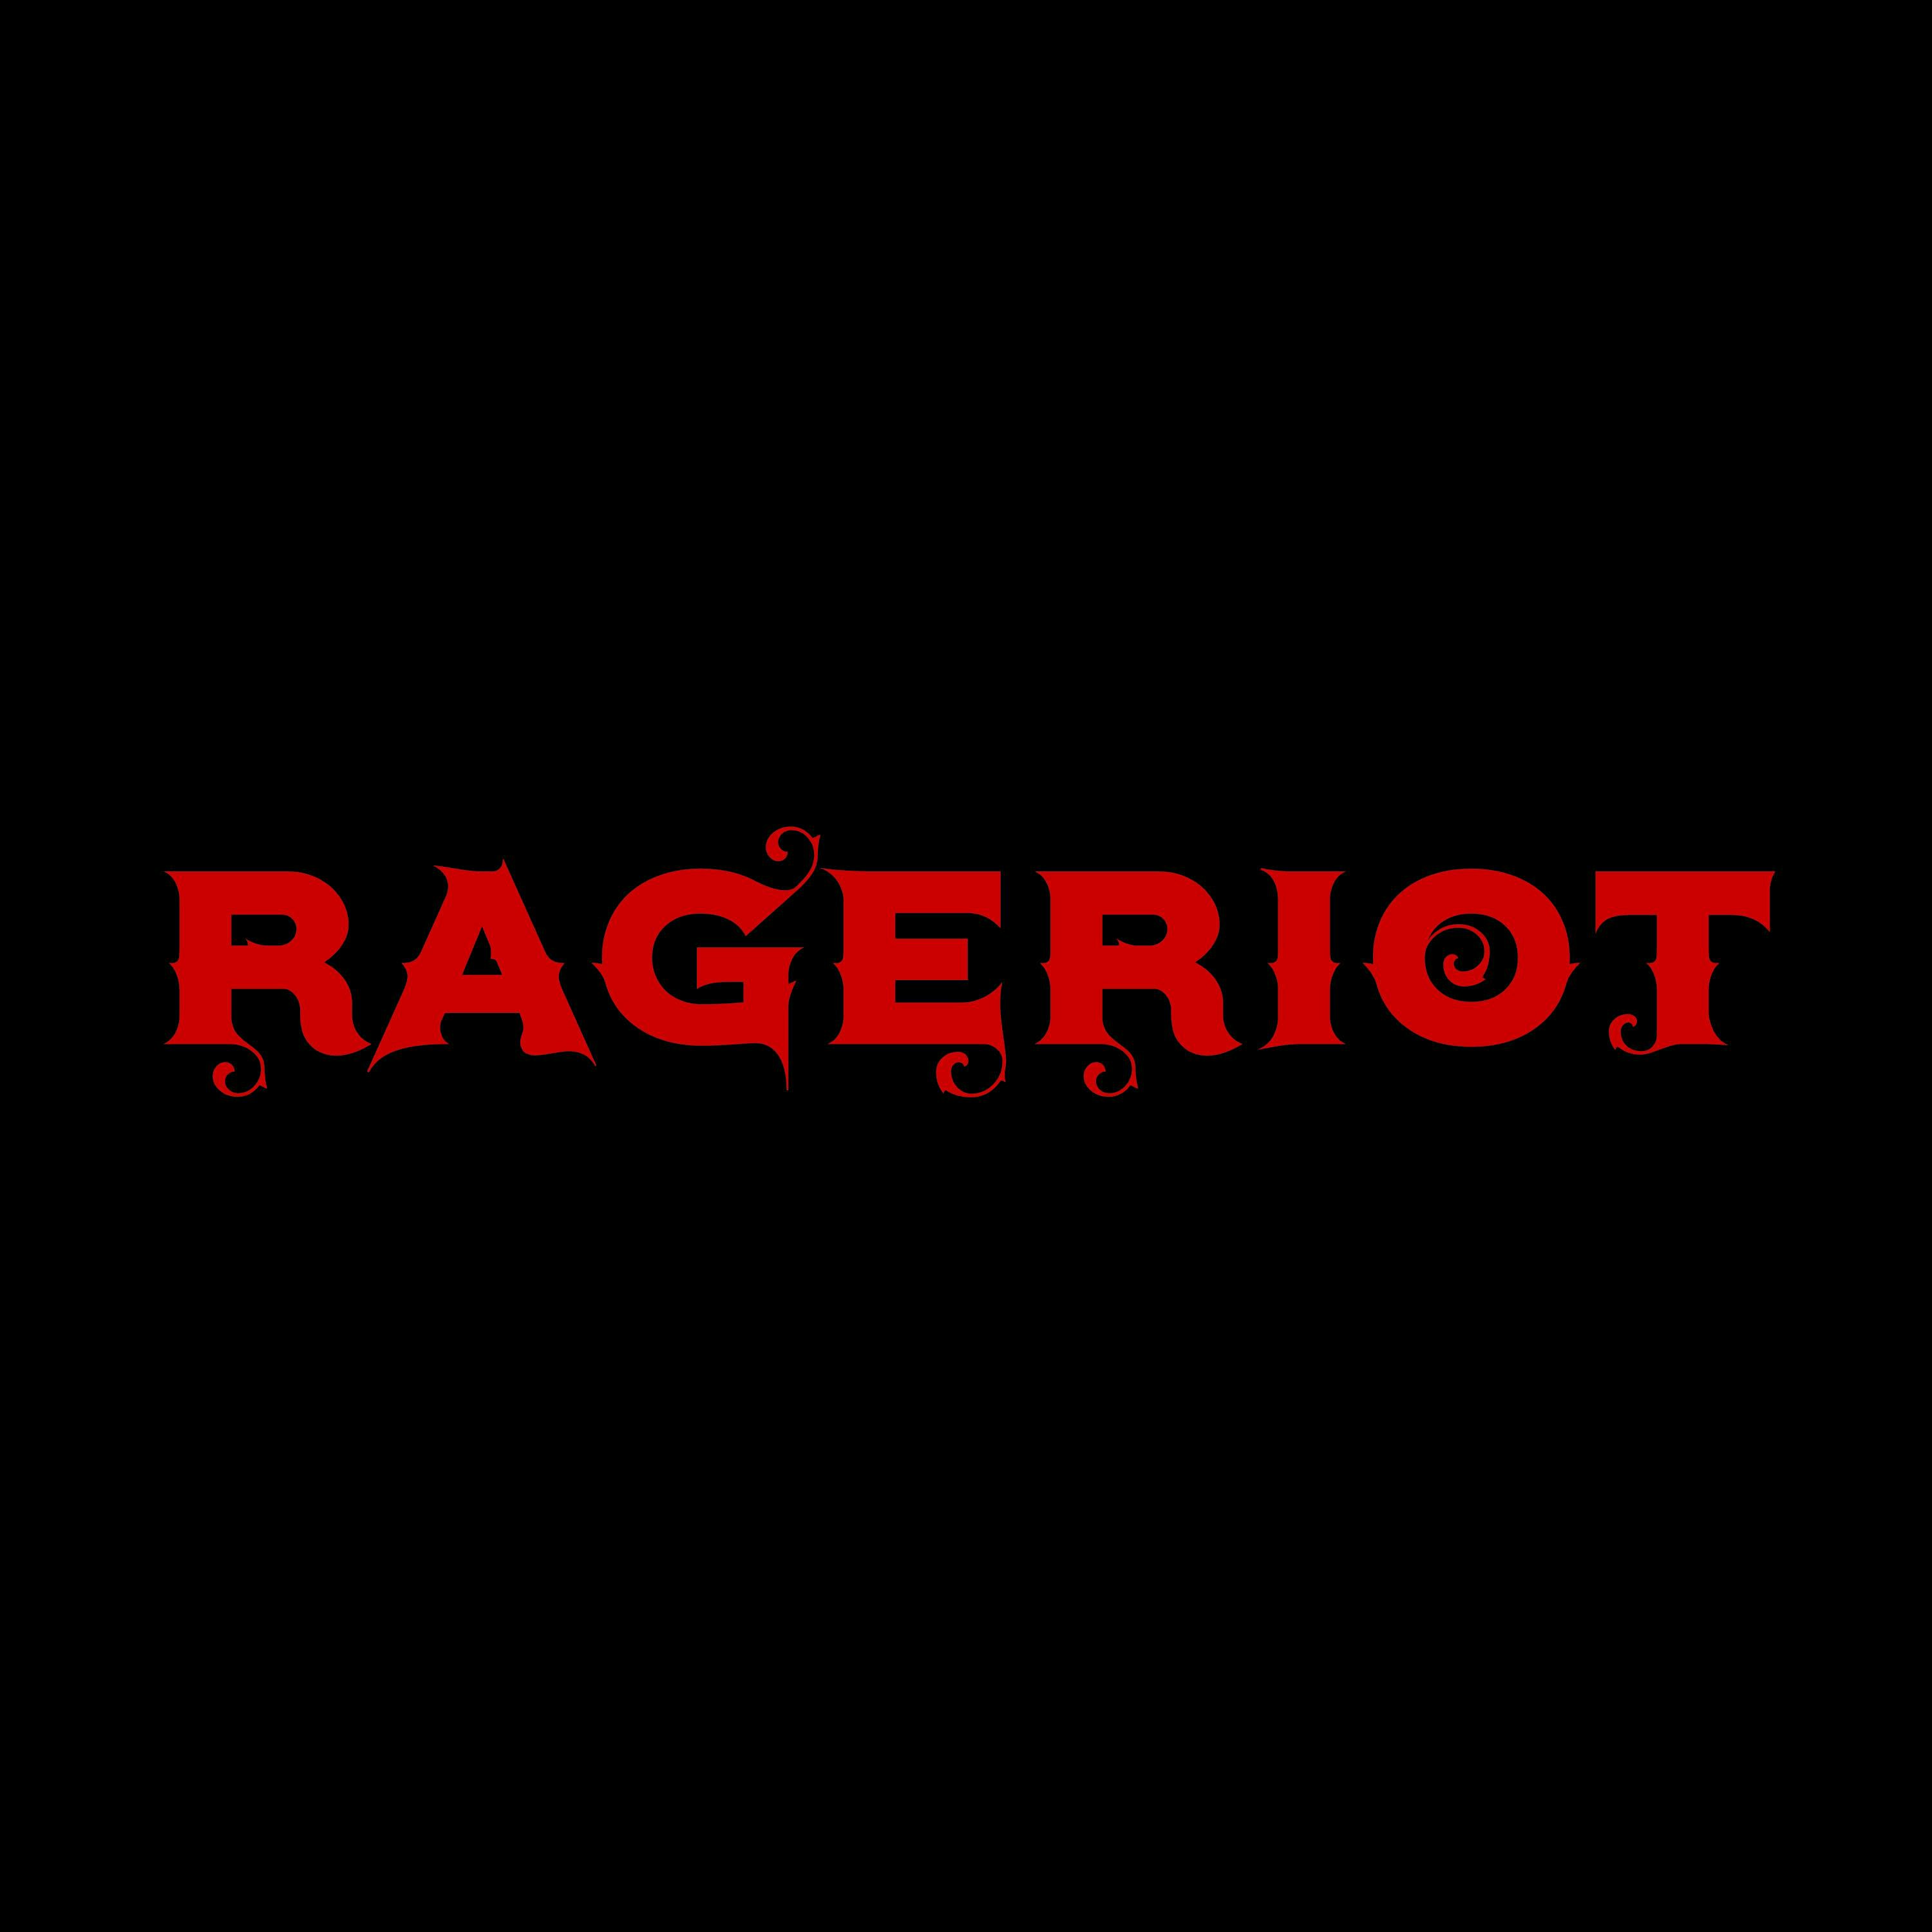 RageRiot!